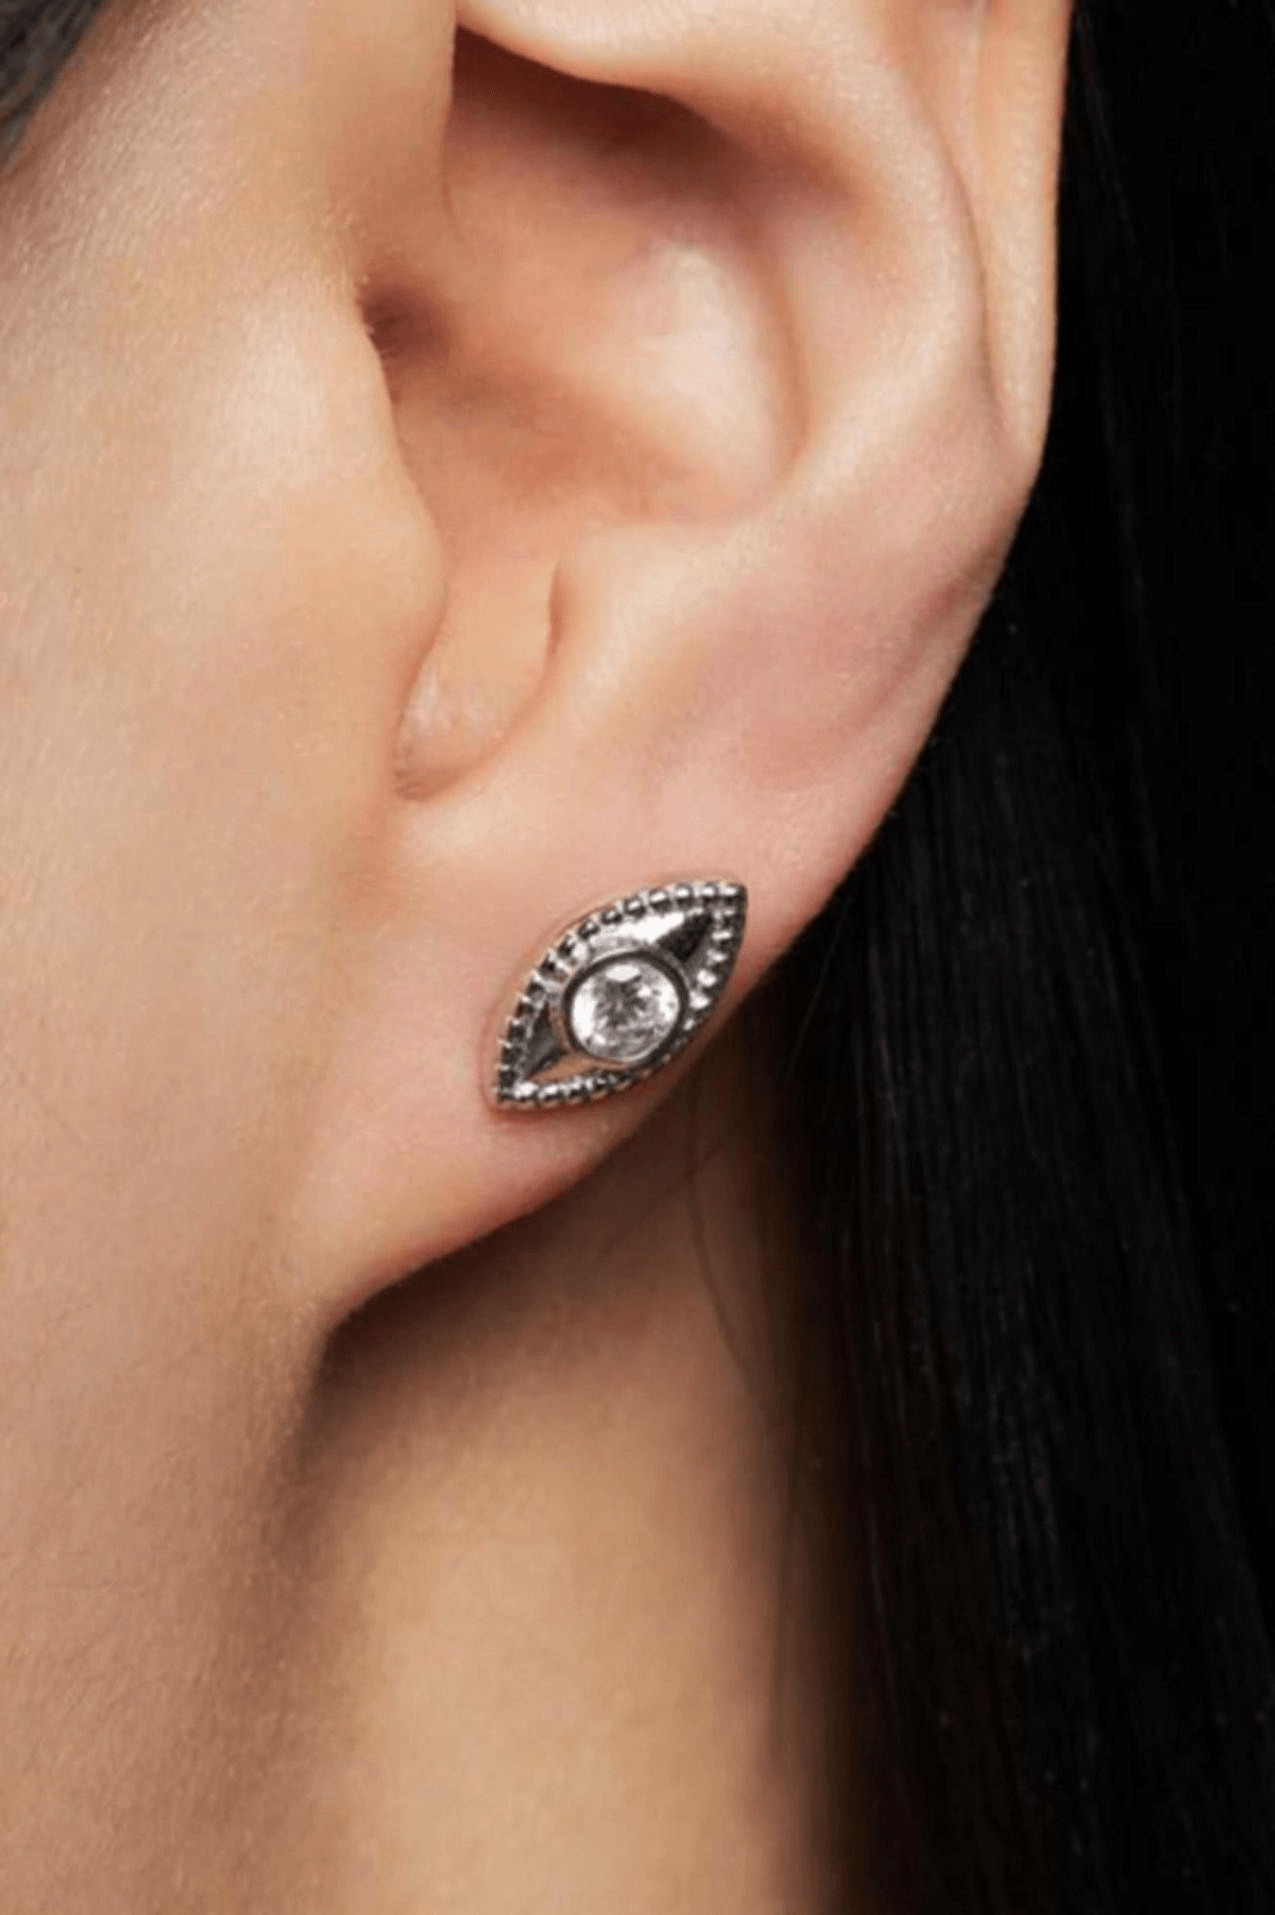 Small Crystal Eye Sterling Silver Earrings - Uniqvibe